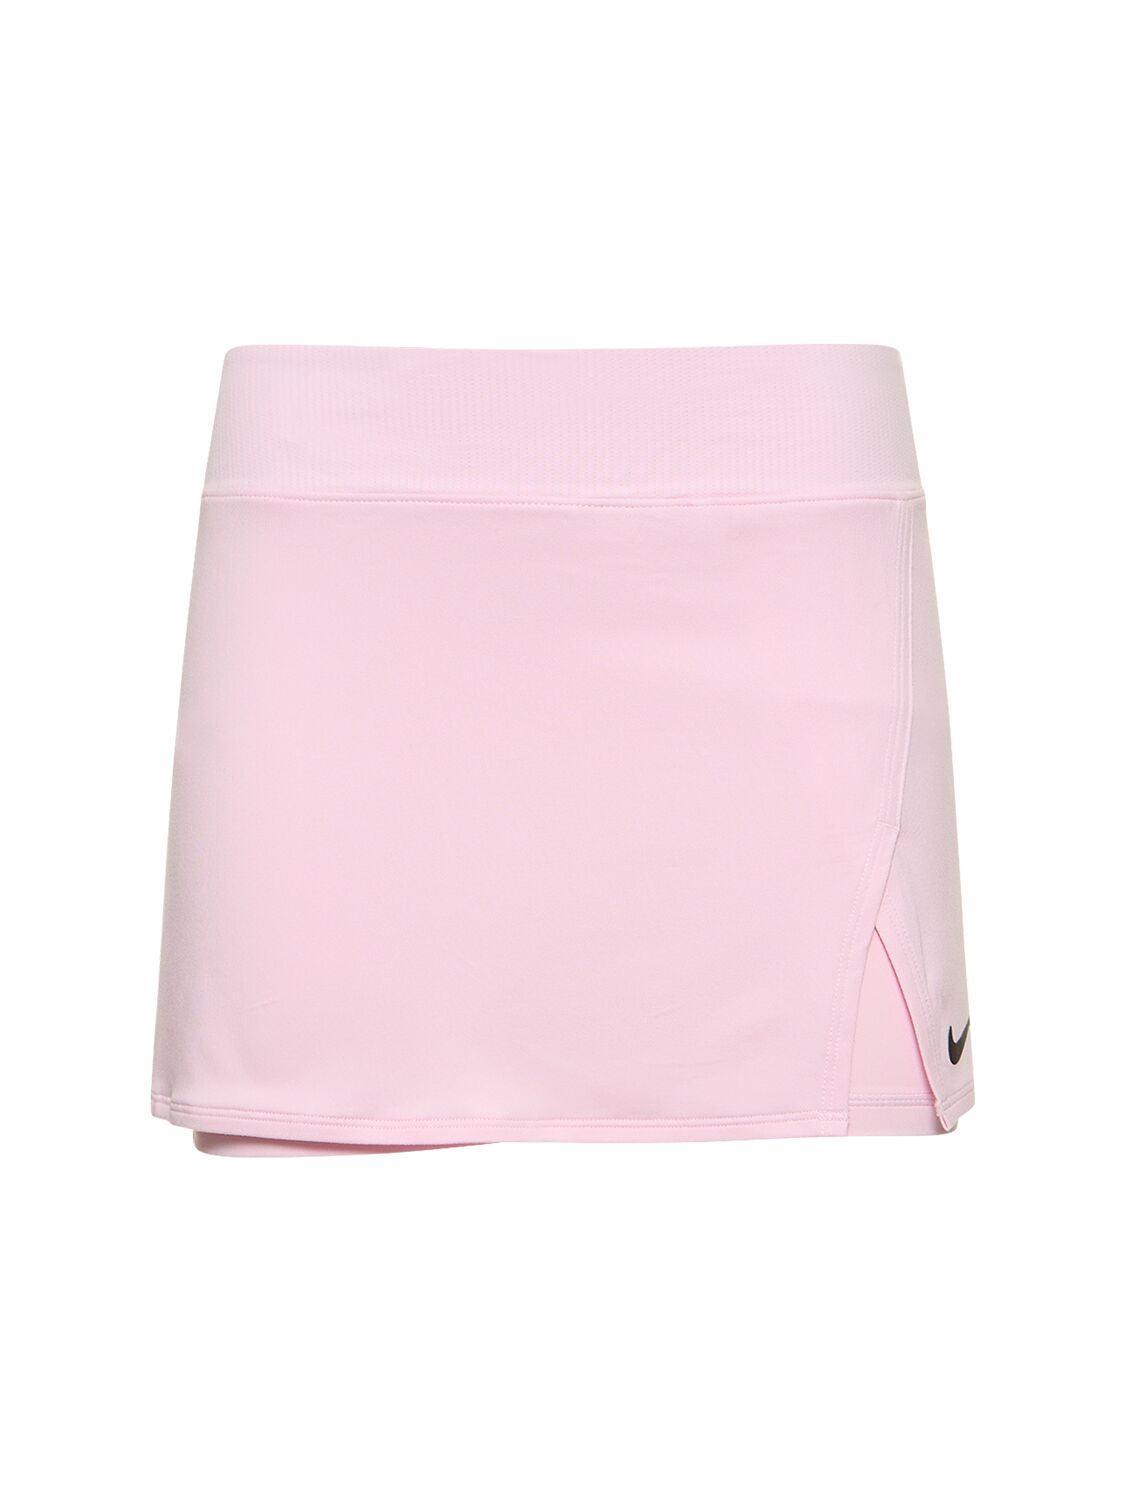 Nike Dri-fit Tennis Skirt In Pink